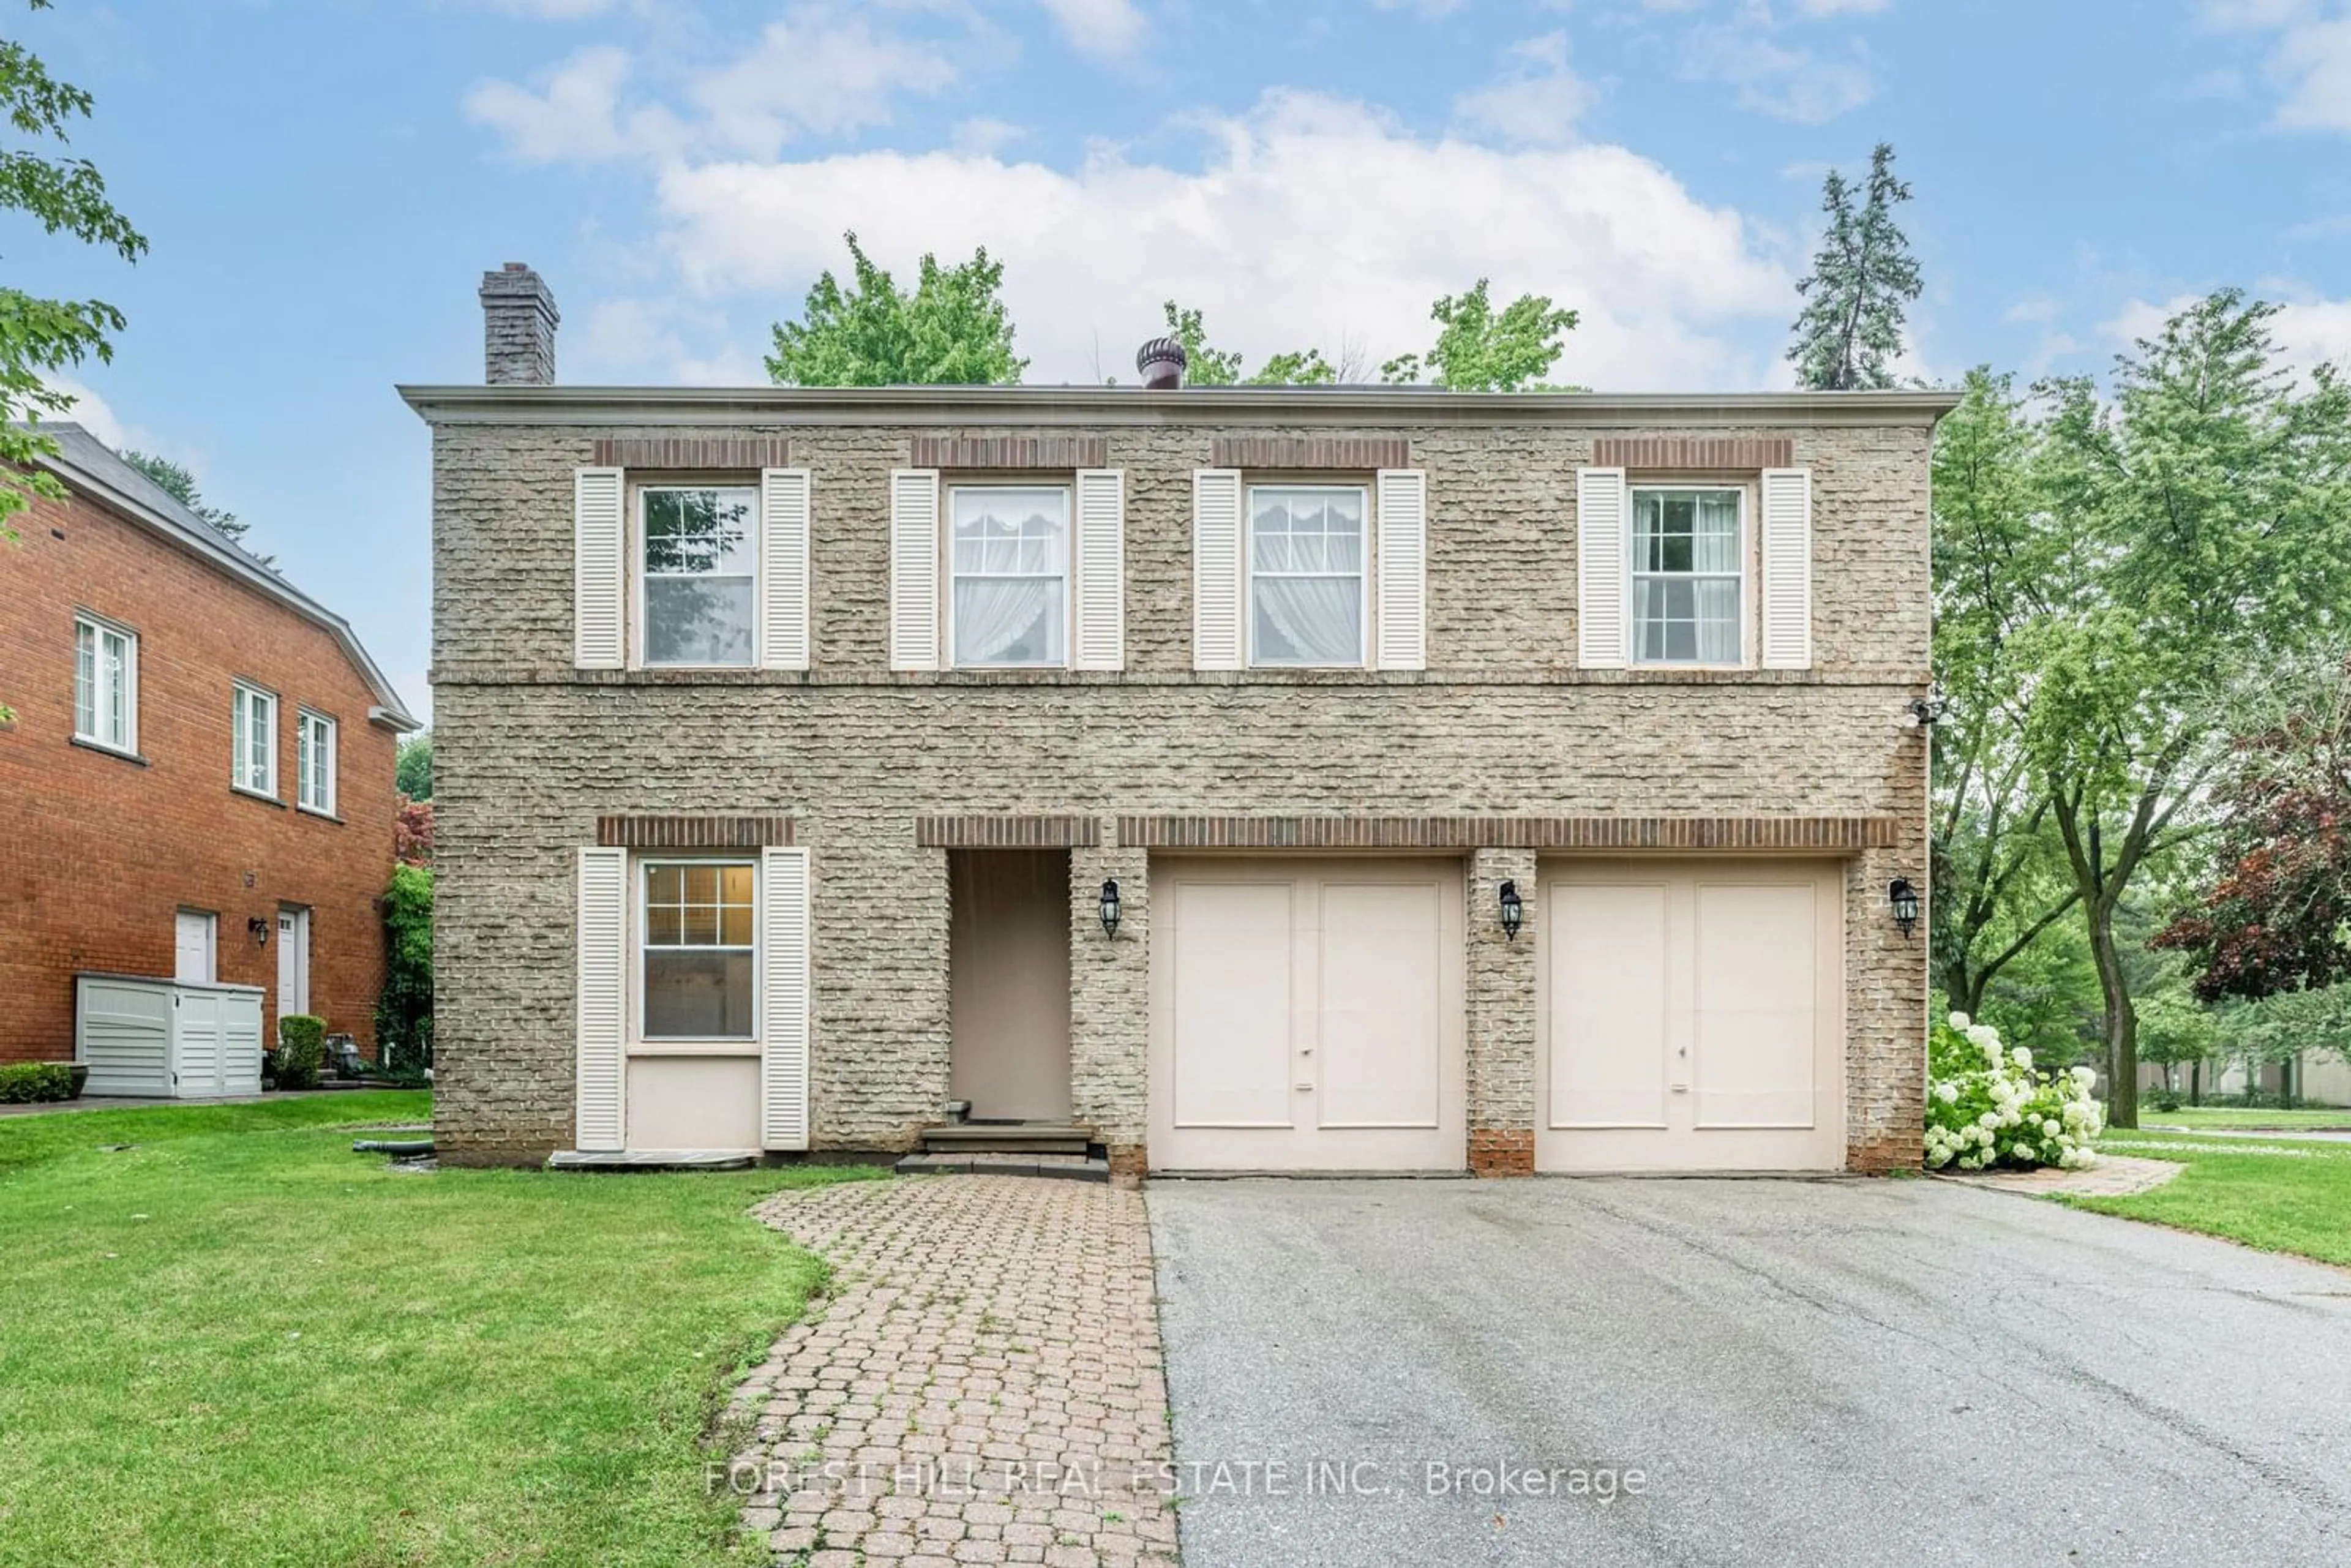 Home with brick exterior material for 360 Banbury Rd, Toronto Ontario M2L 2V5